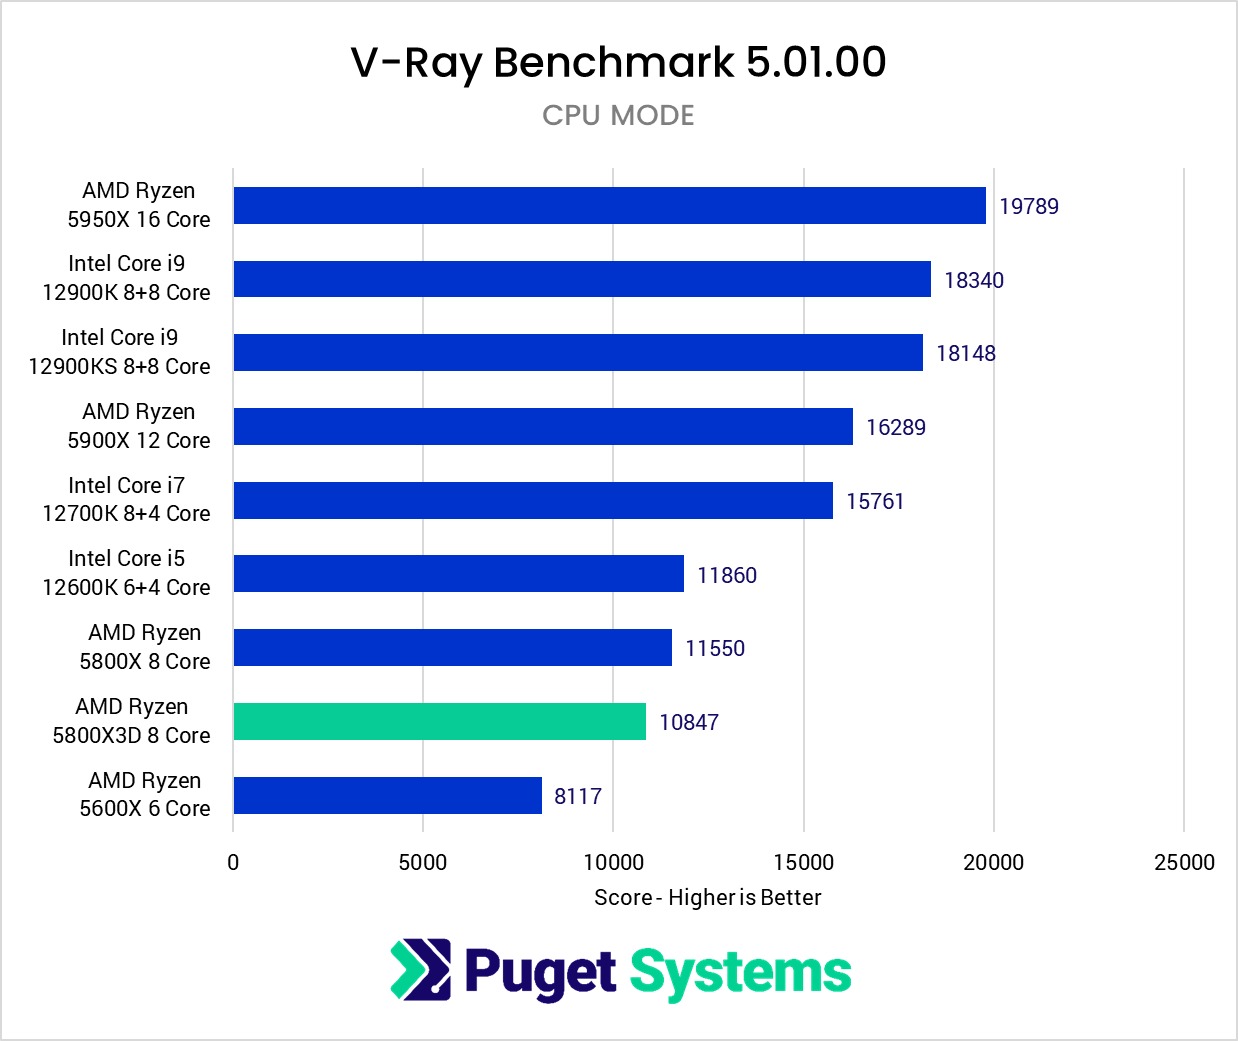 AMD Ryzen 5800X3D vs 5800X V-Ray Benchmark score